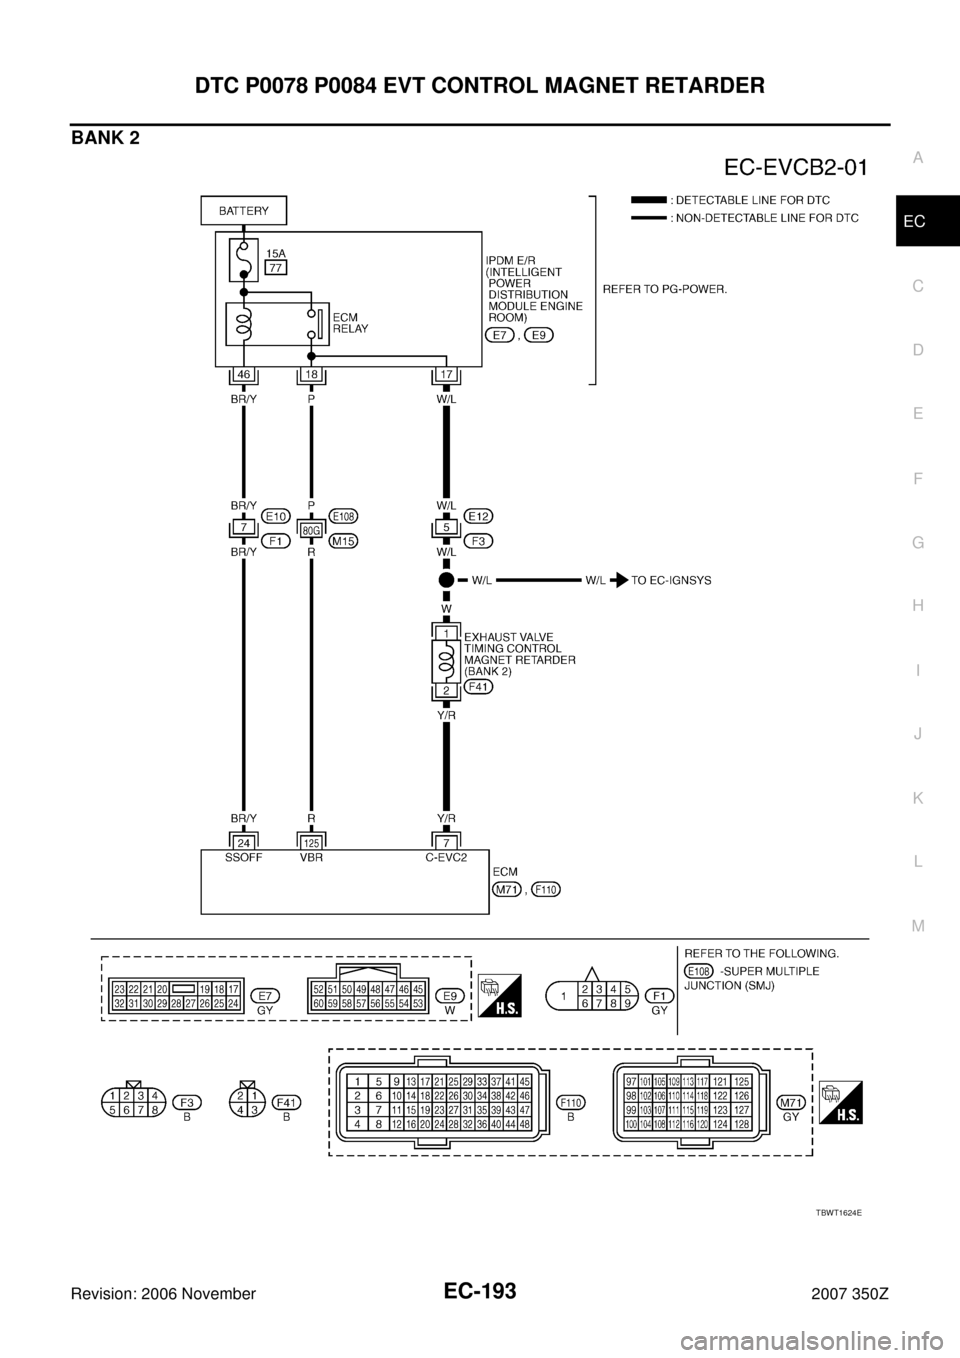 NISSAN 350Z 2007 Z33 Engine Control Workshop Manual DTC P0078 P0084 EVT CONTROL MAGNET RETARDER
EC-193
C
D
E
F
G
H
I
J
K
L
MA
EC
Revision: 2006 November2007 350Z
BANK 2
TBWT1624E 